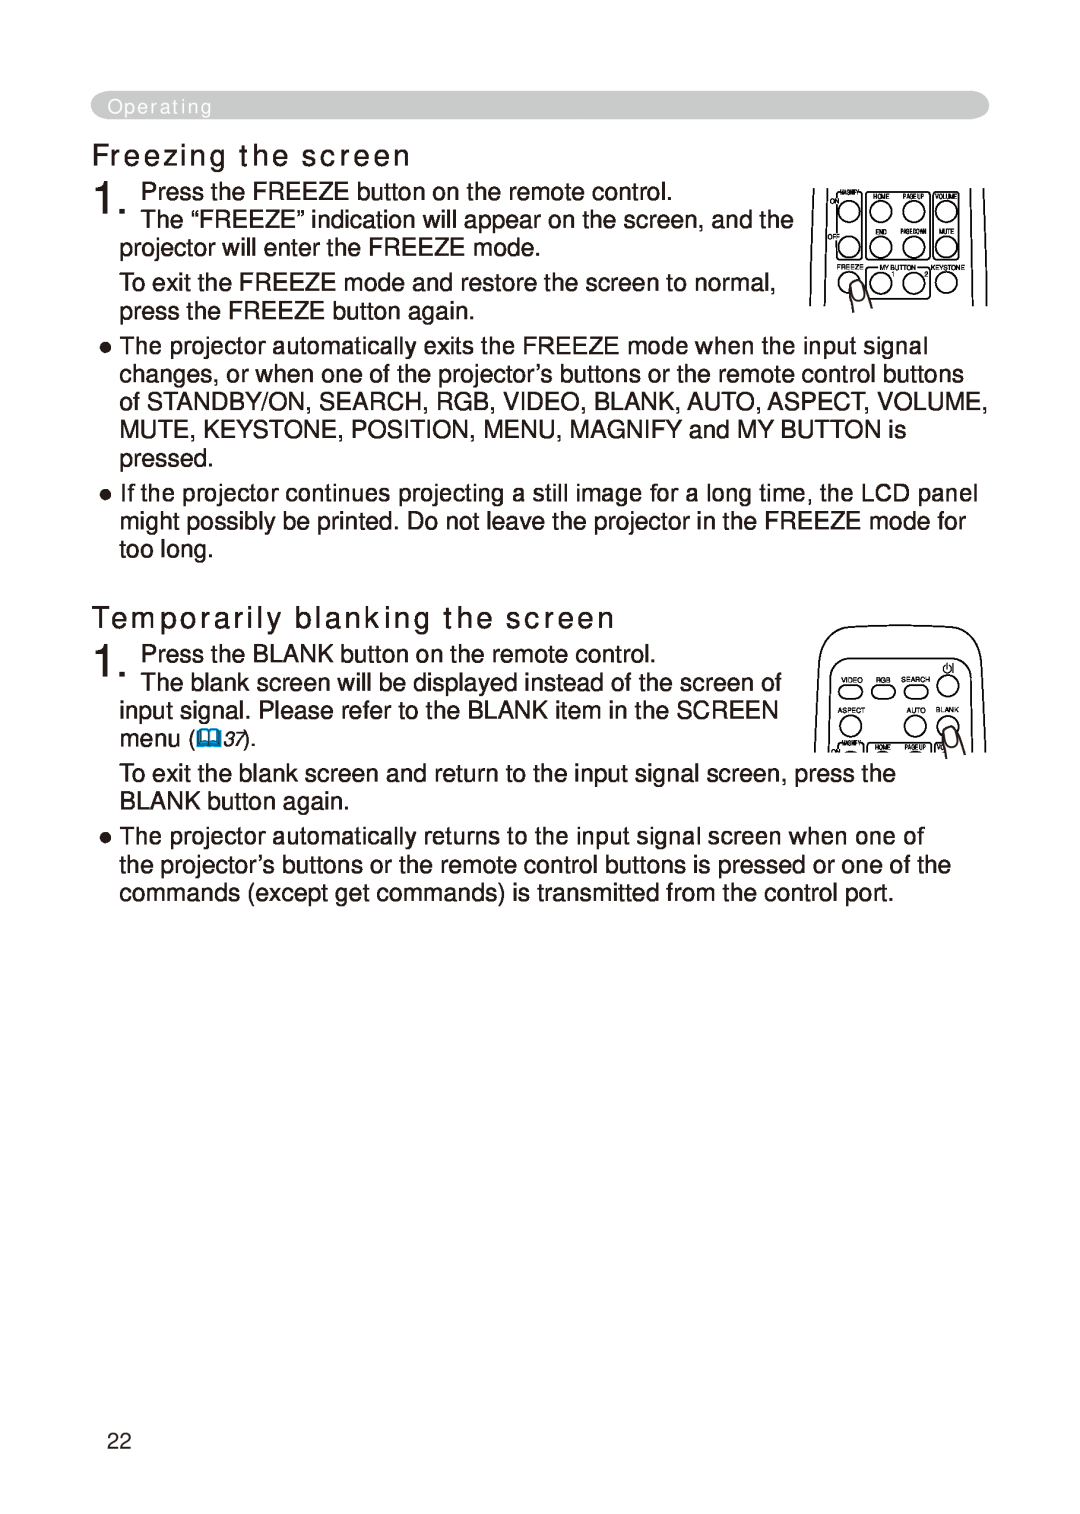 Dukane 8776-RJ, 8755E-RJ user manual Freezing the screen, Temporarily blanking the screen 